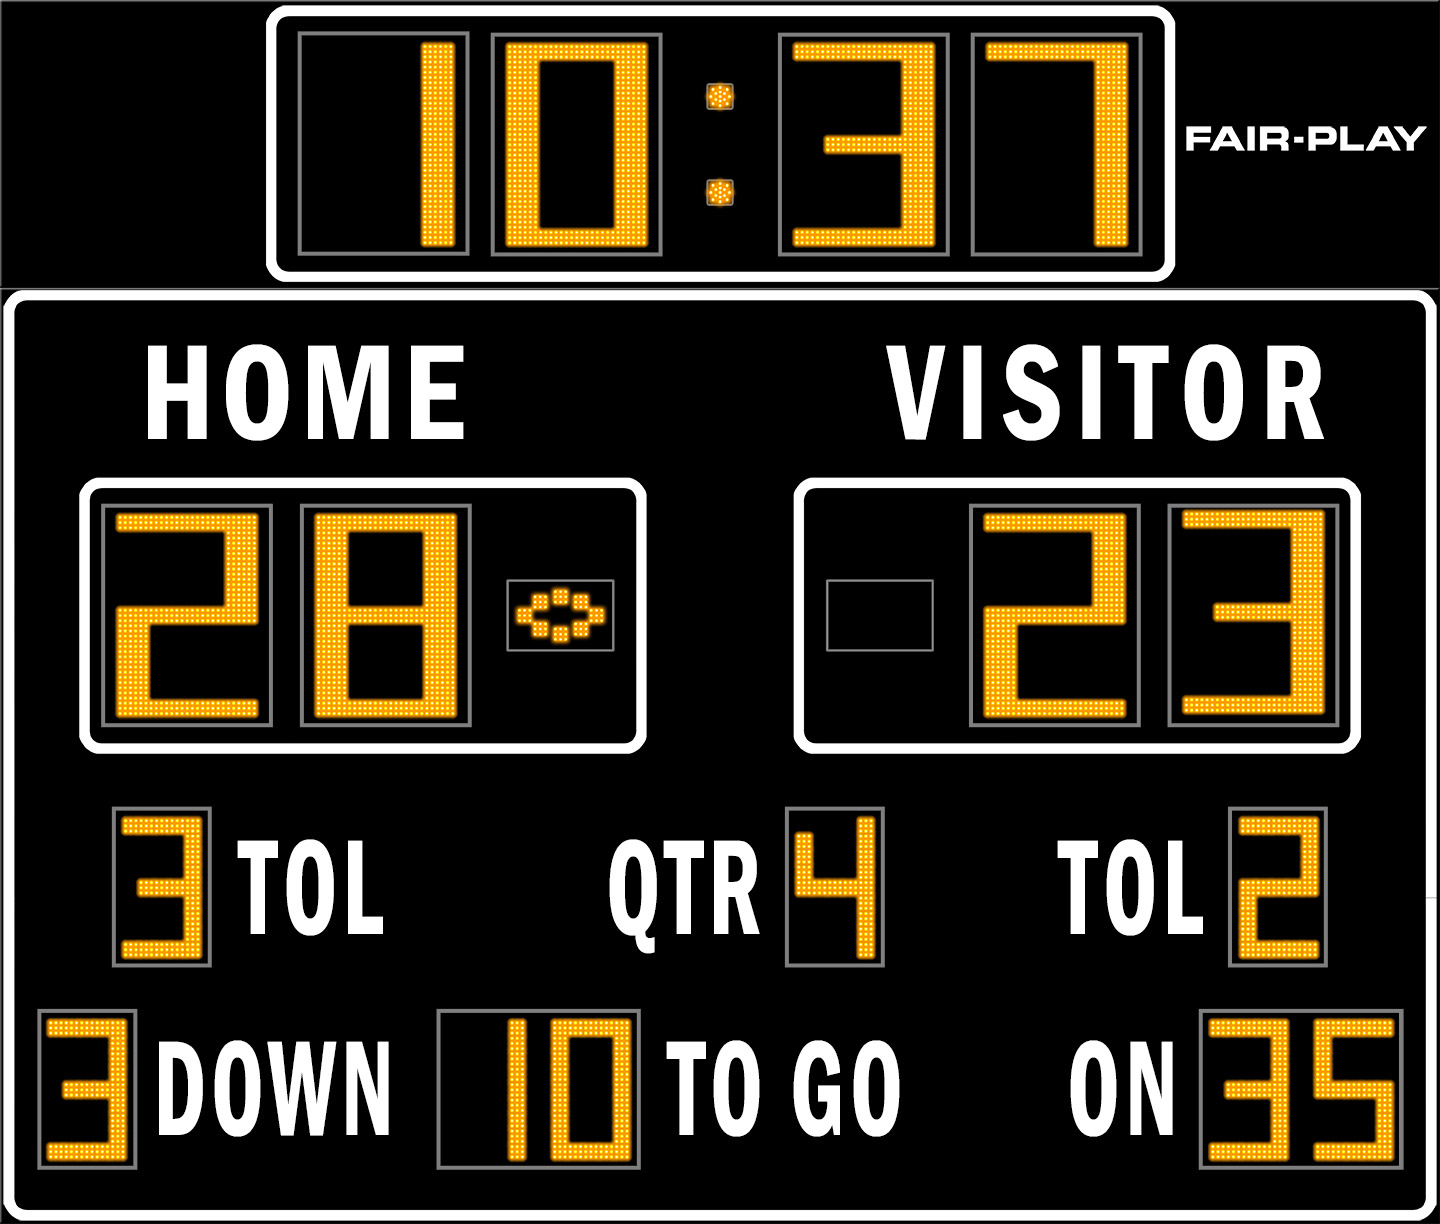 Fb 8165 2 Football Scoreboard Fair Play Scoreboards